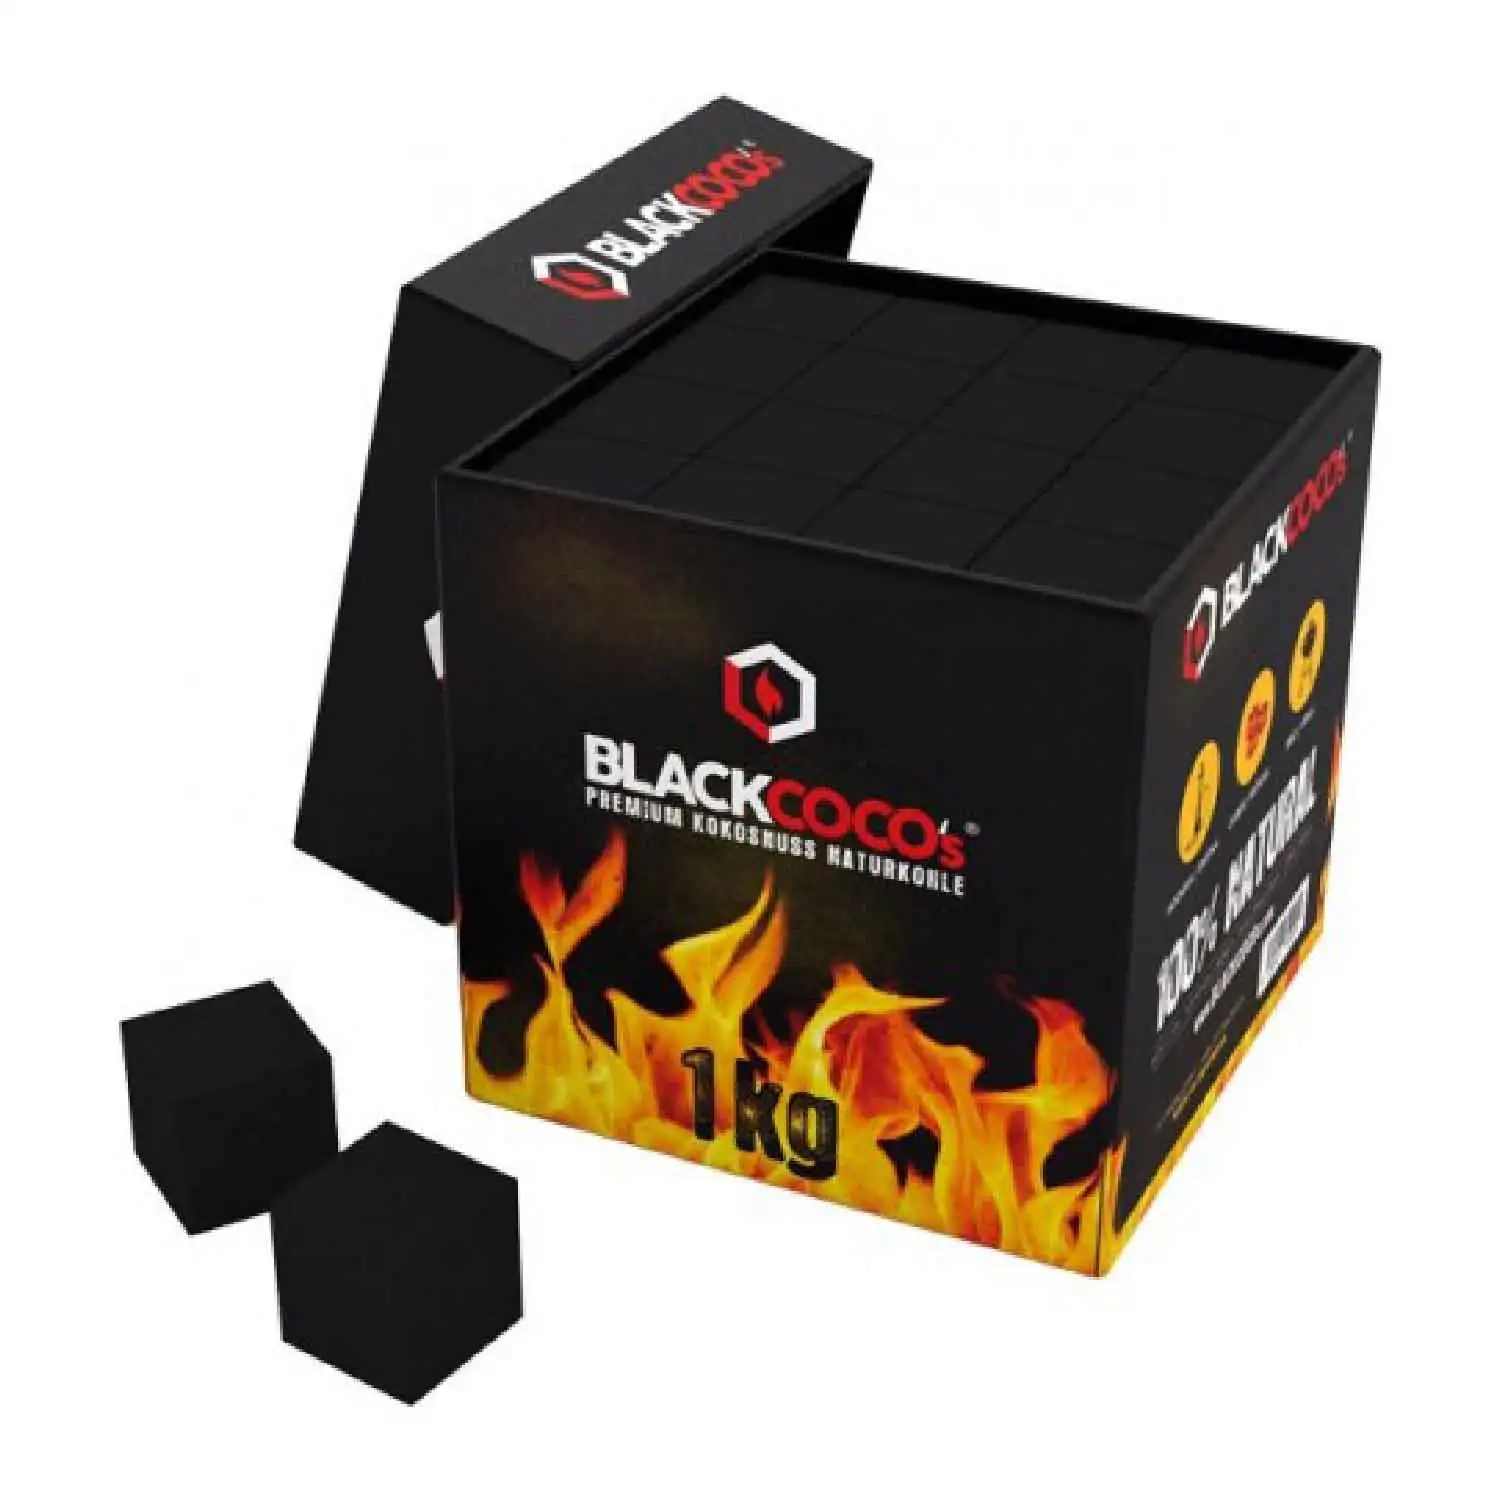 Blackcoco charcoal 1kg - Buy at Real Tobacco